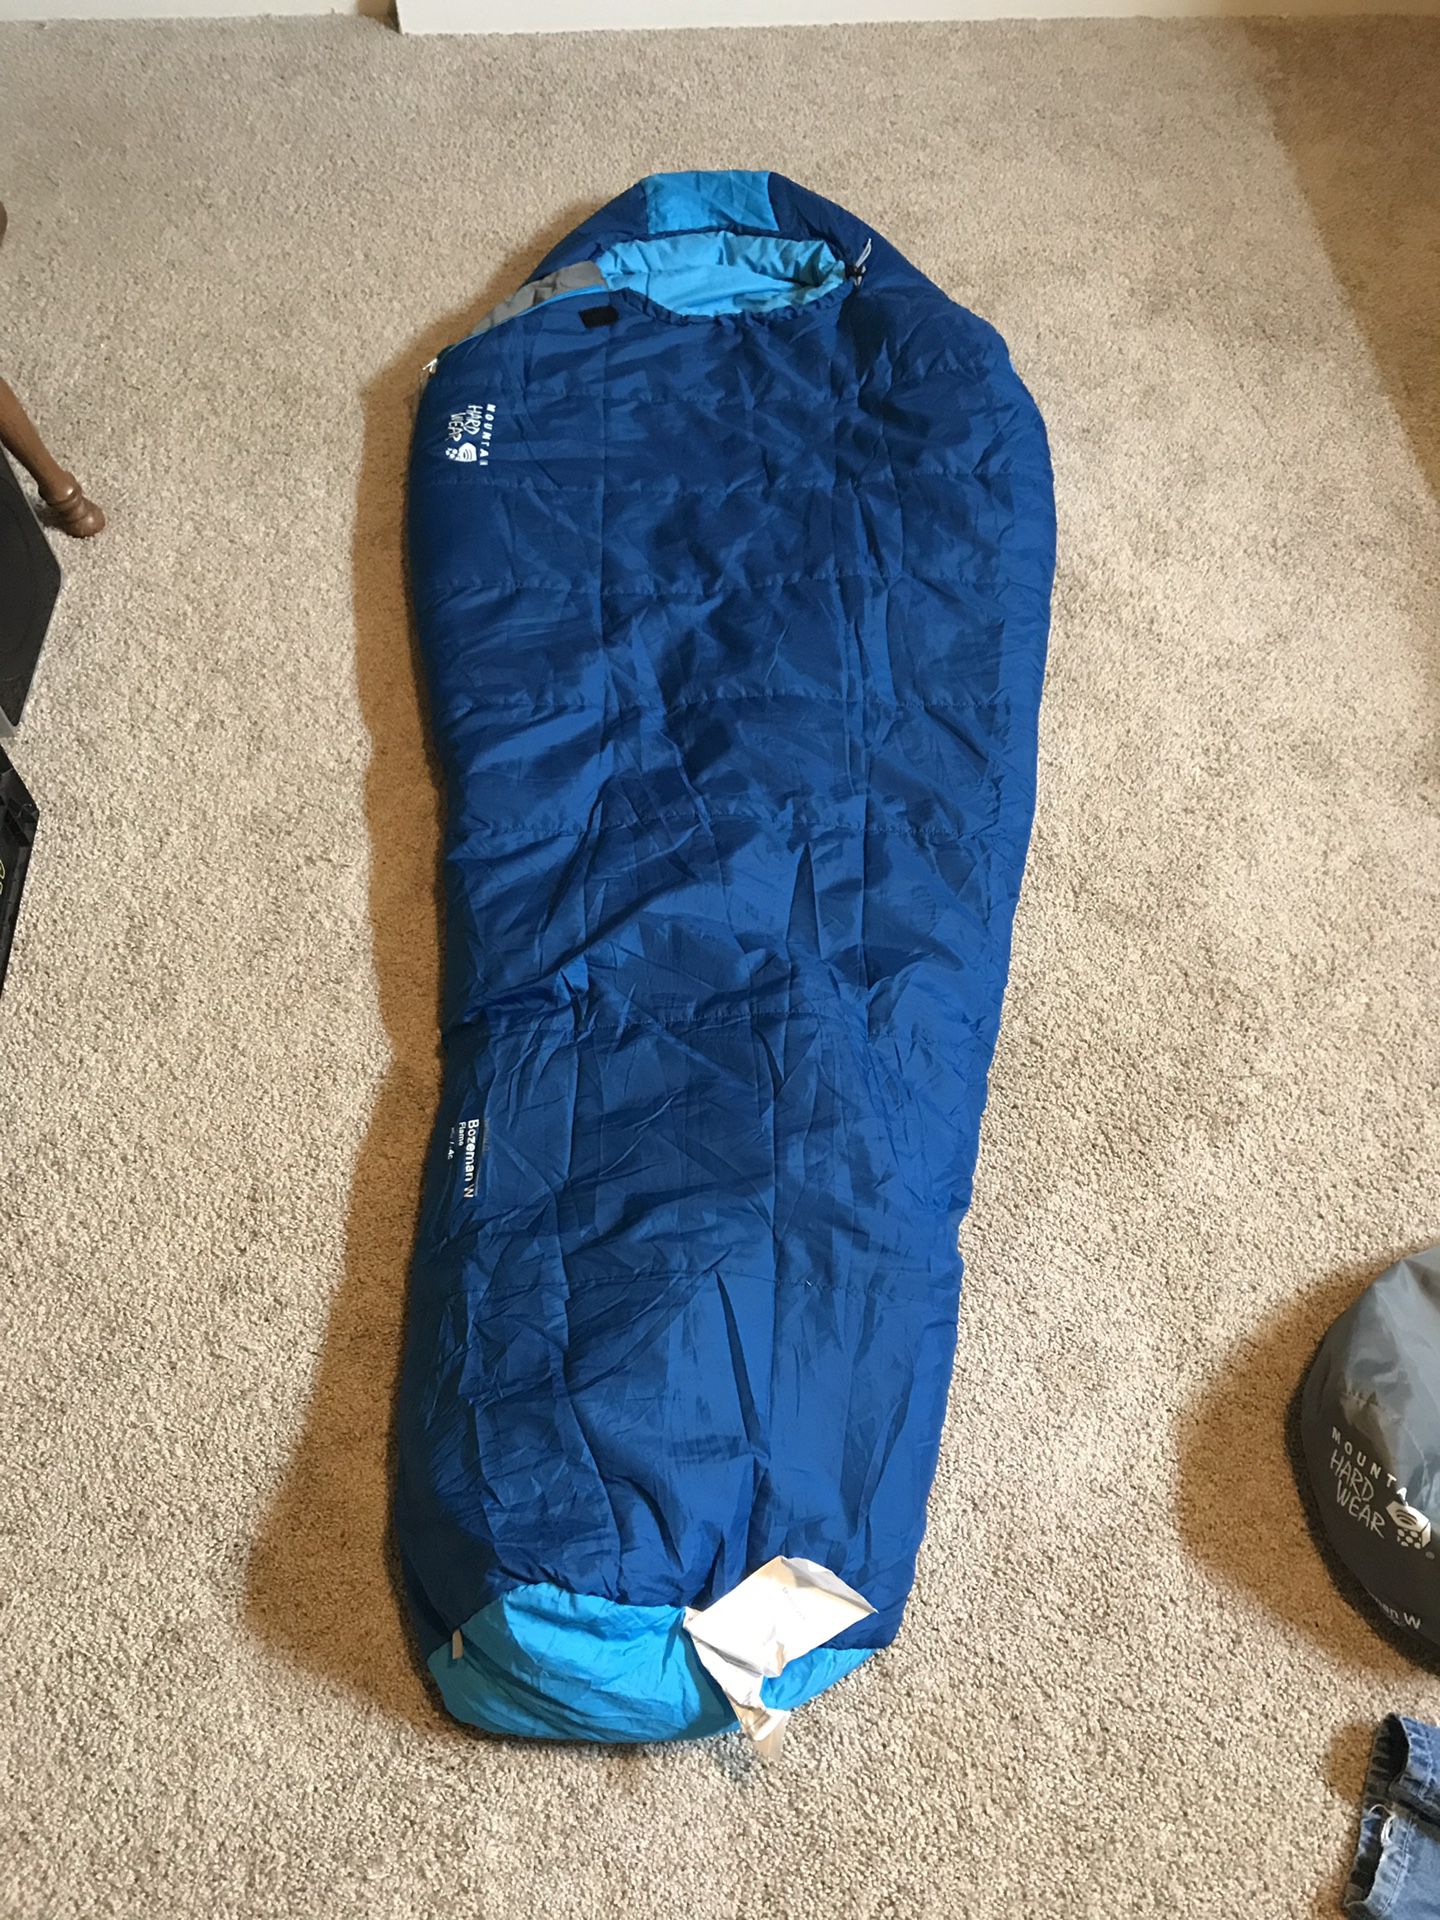 Mountain Hardwear sleeping bag